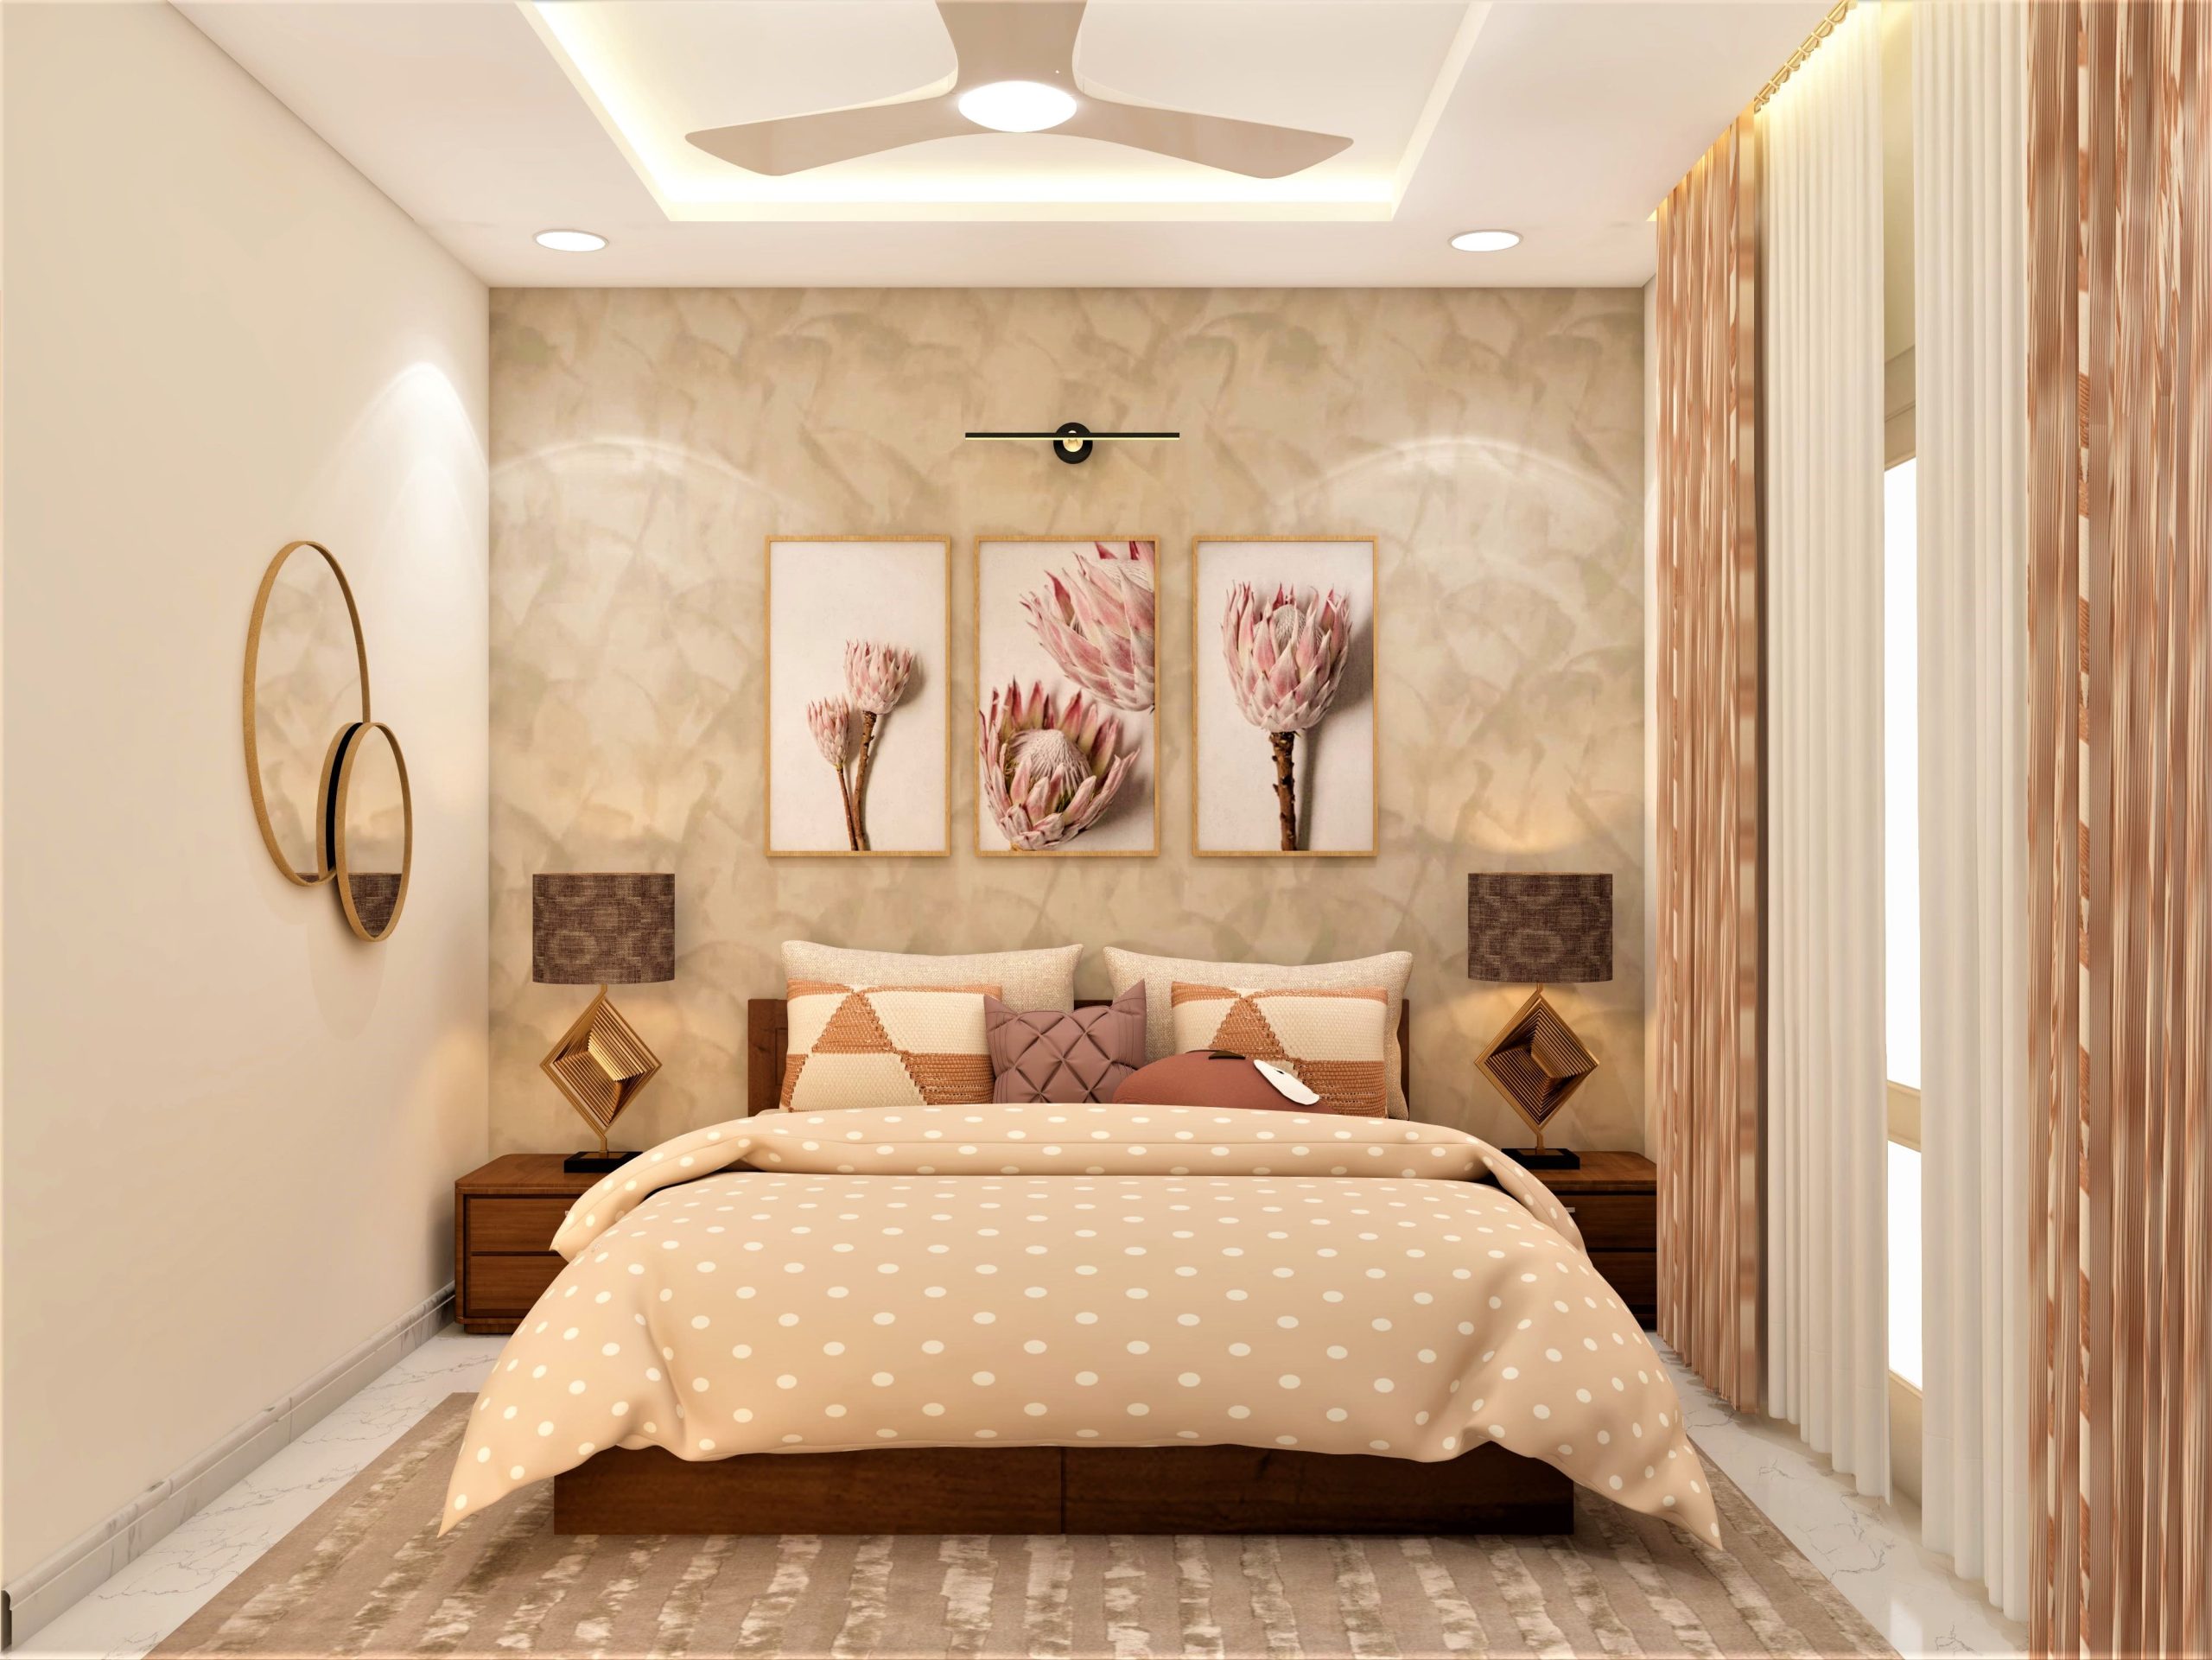 Trending Bedroom Interior Design For